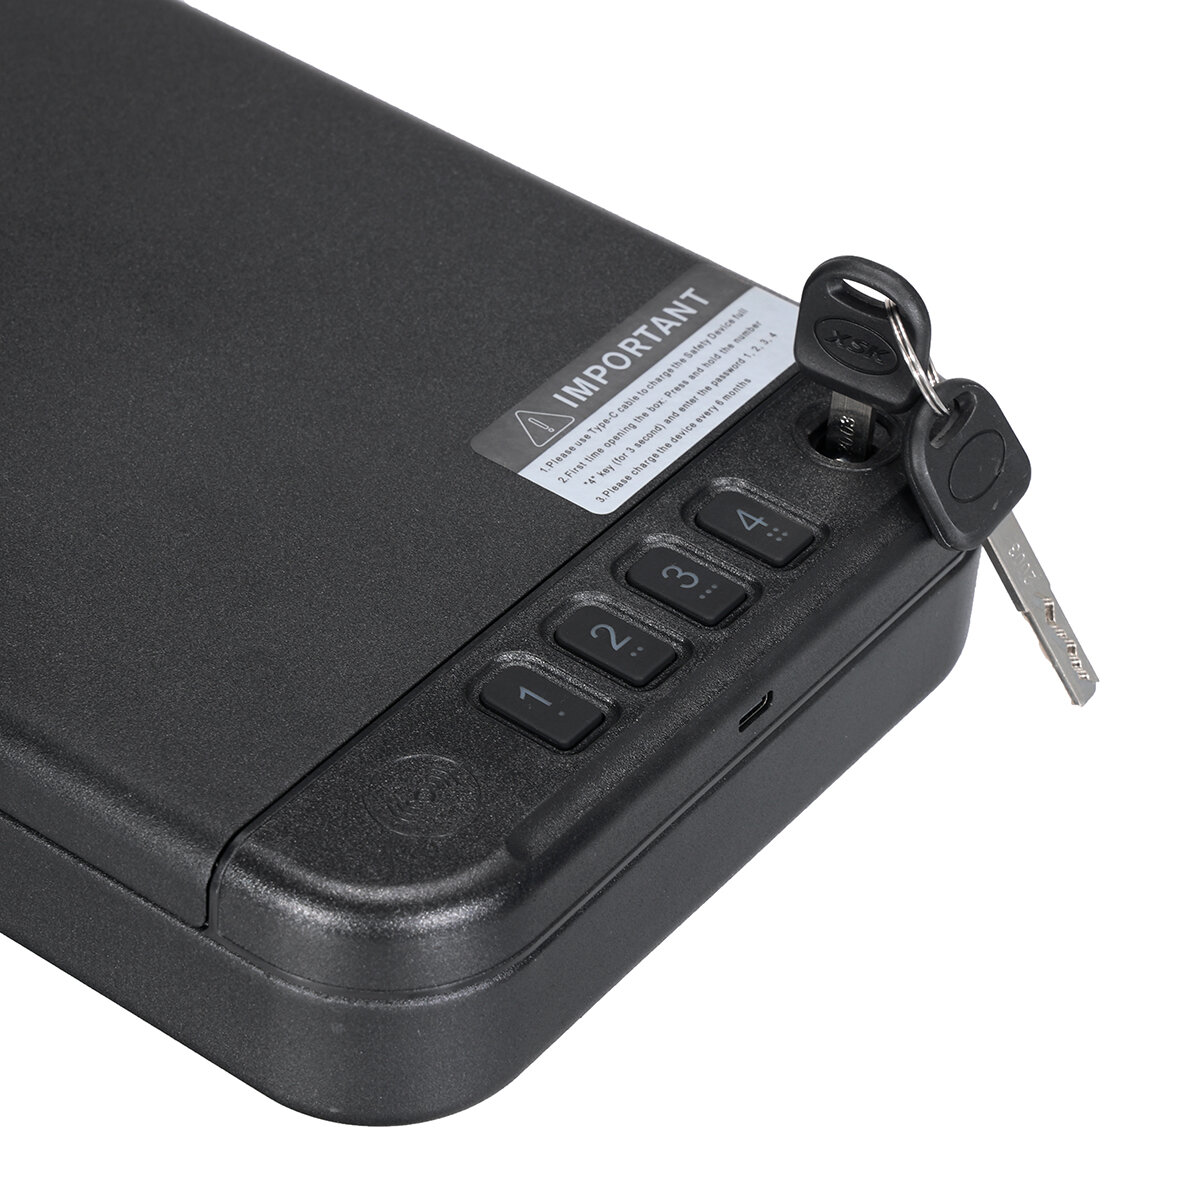 BlackSmith Portable Key Lock Safe Box with Key Cable Lock for Cars Travel 3 Ways Quick Access Lock Box with RFID Digital Keypad Backup Keys Unlock COD